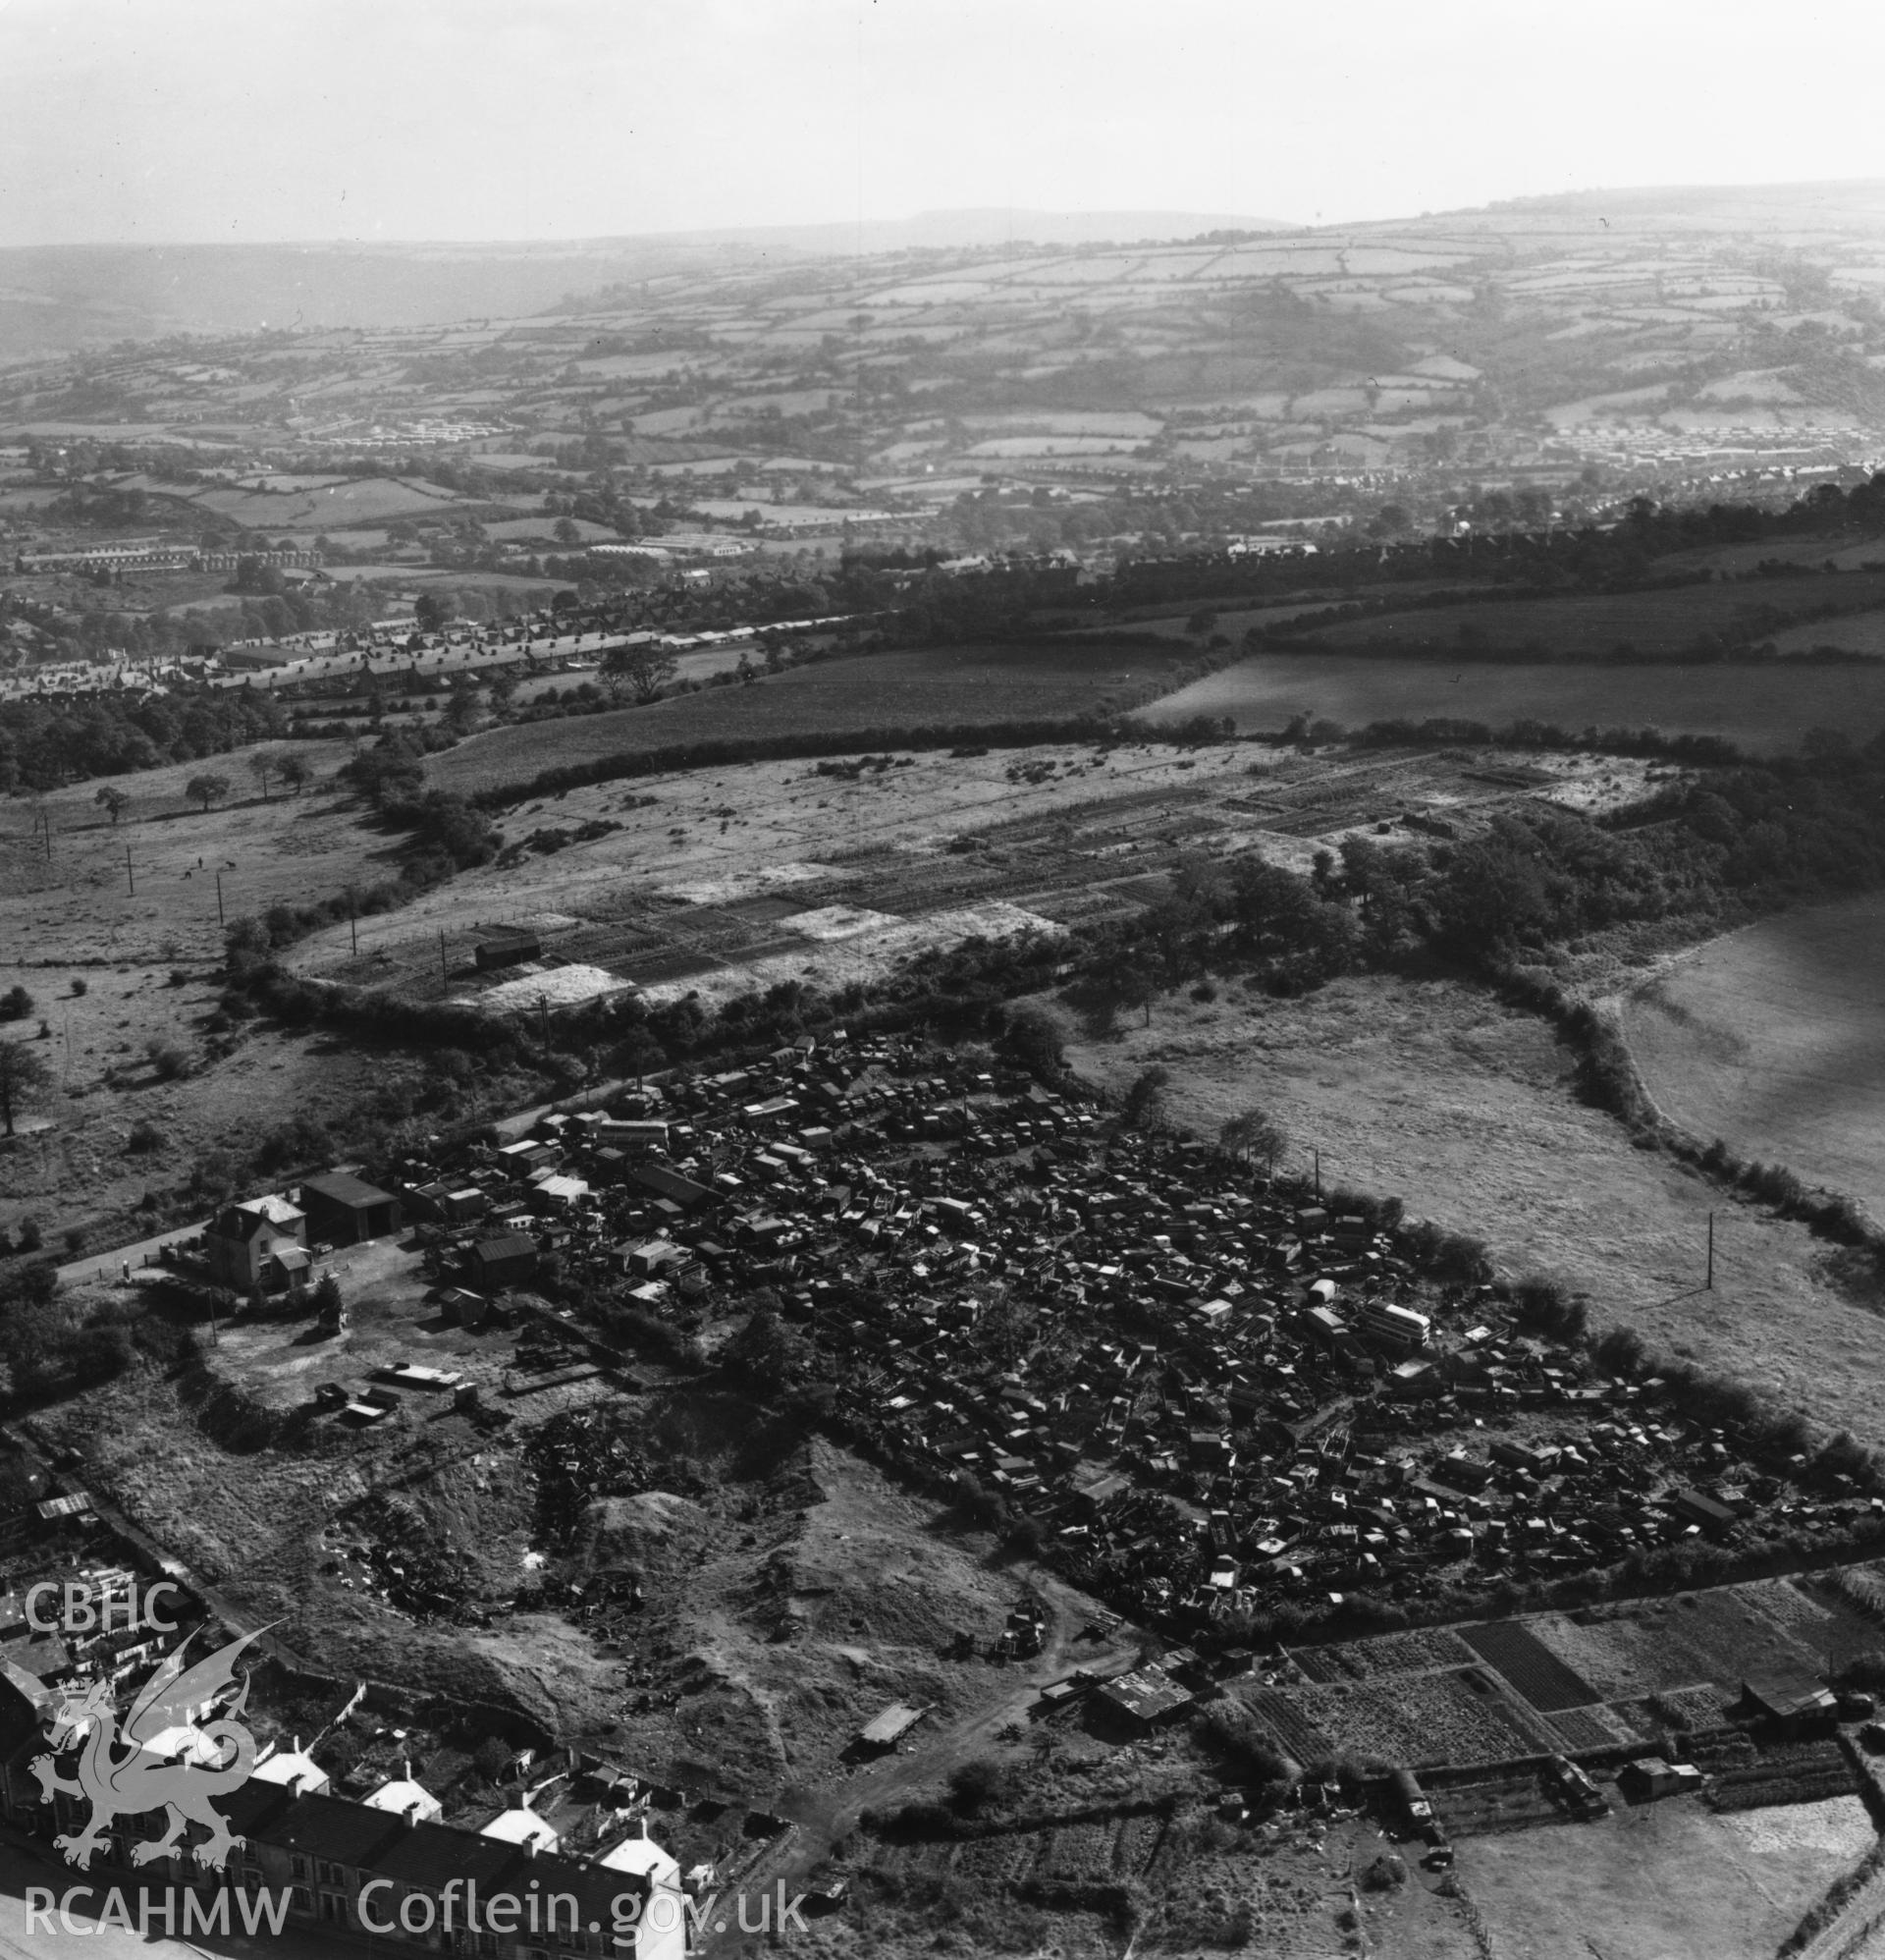 View of Gibbs Brothers vehicle scrap yard at Blackwood, Mynyddislwyn. Oblique aerial photograph, 5?" cut roll film.